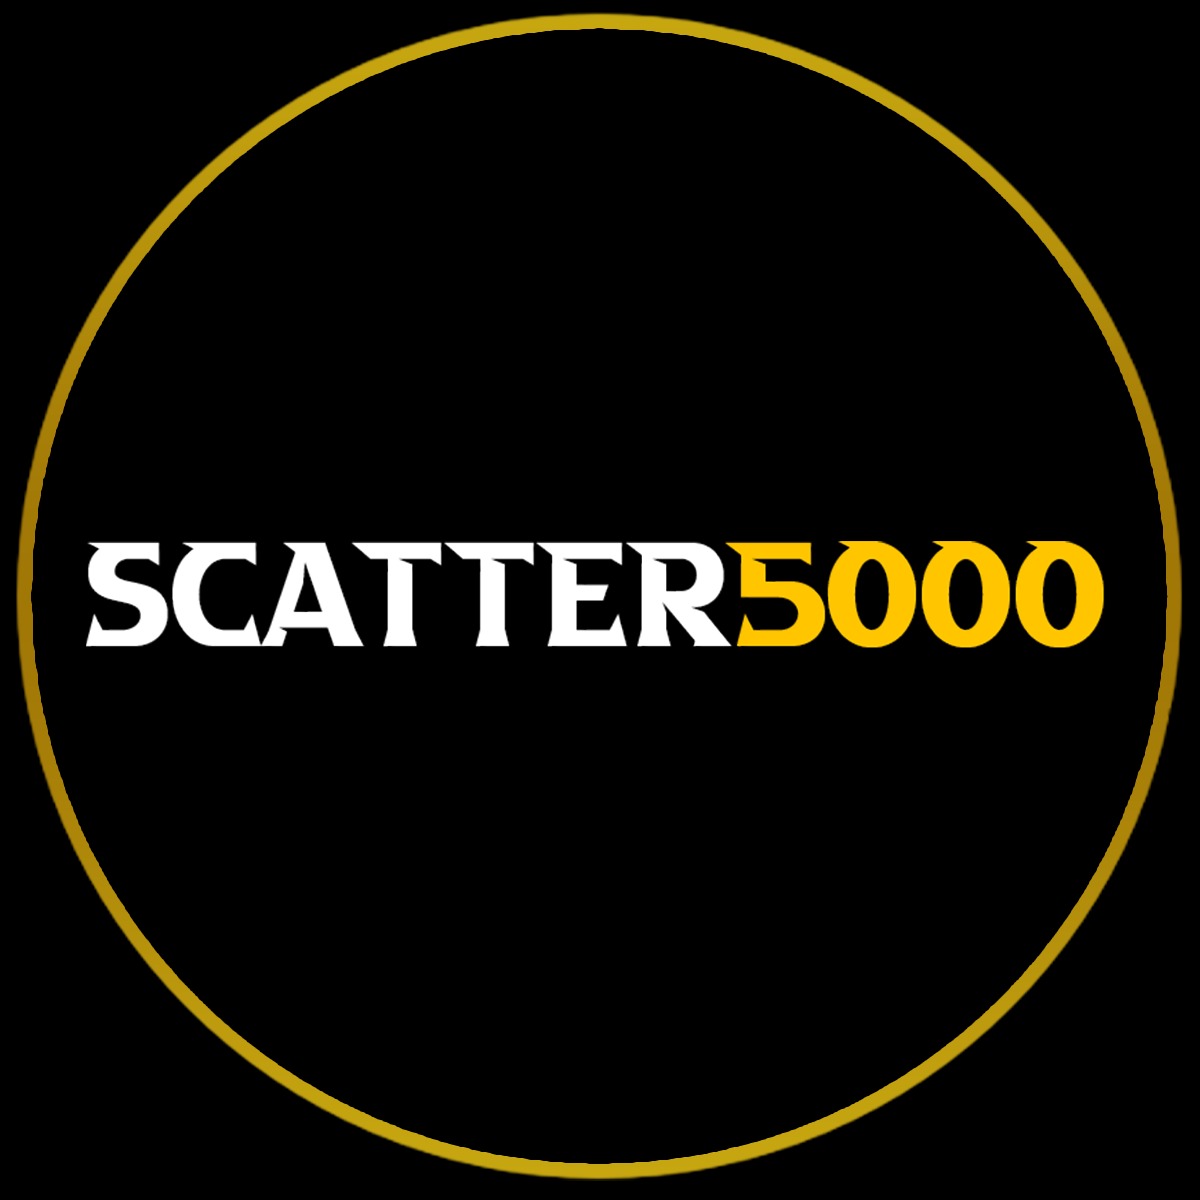 Daftar Scatter5000